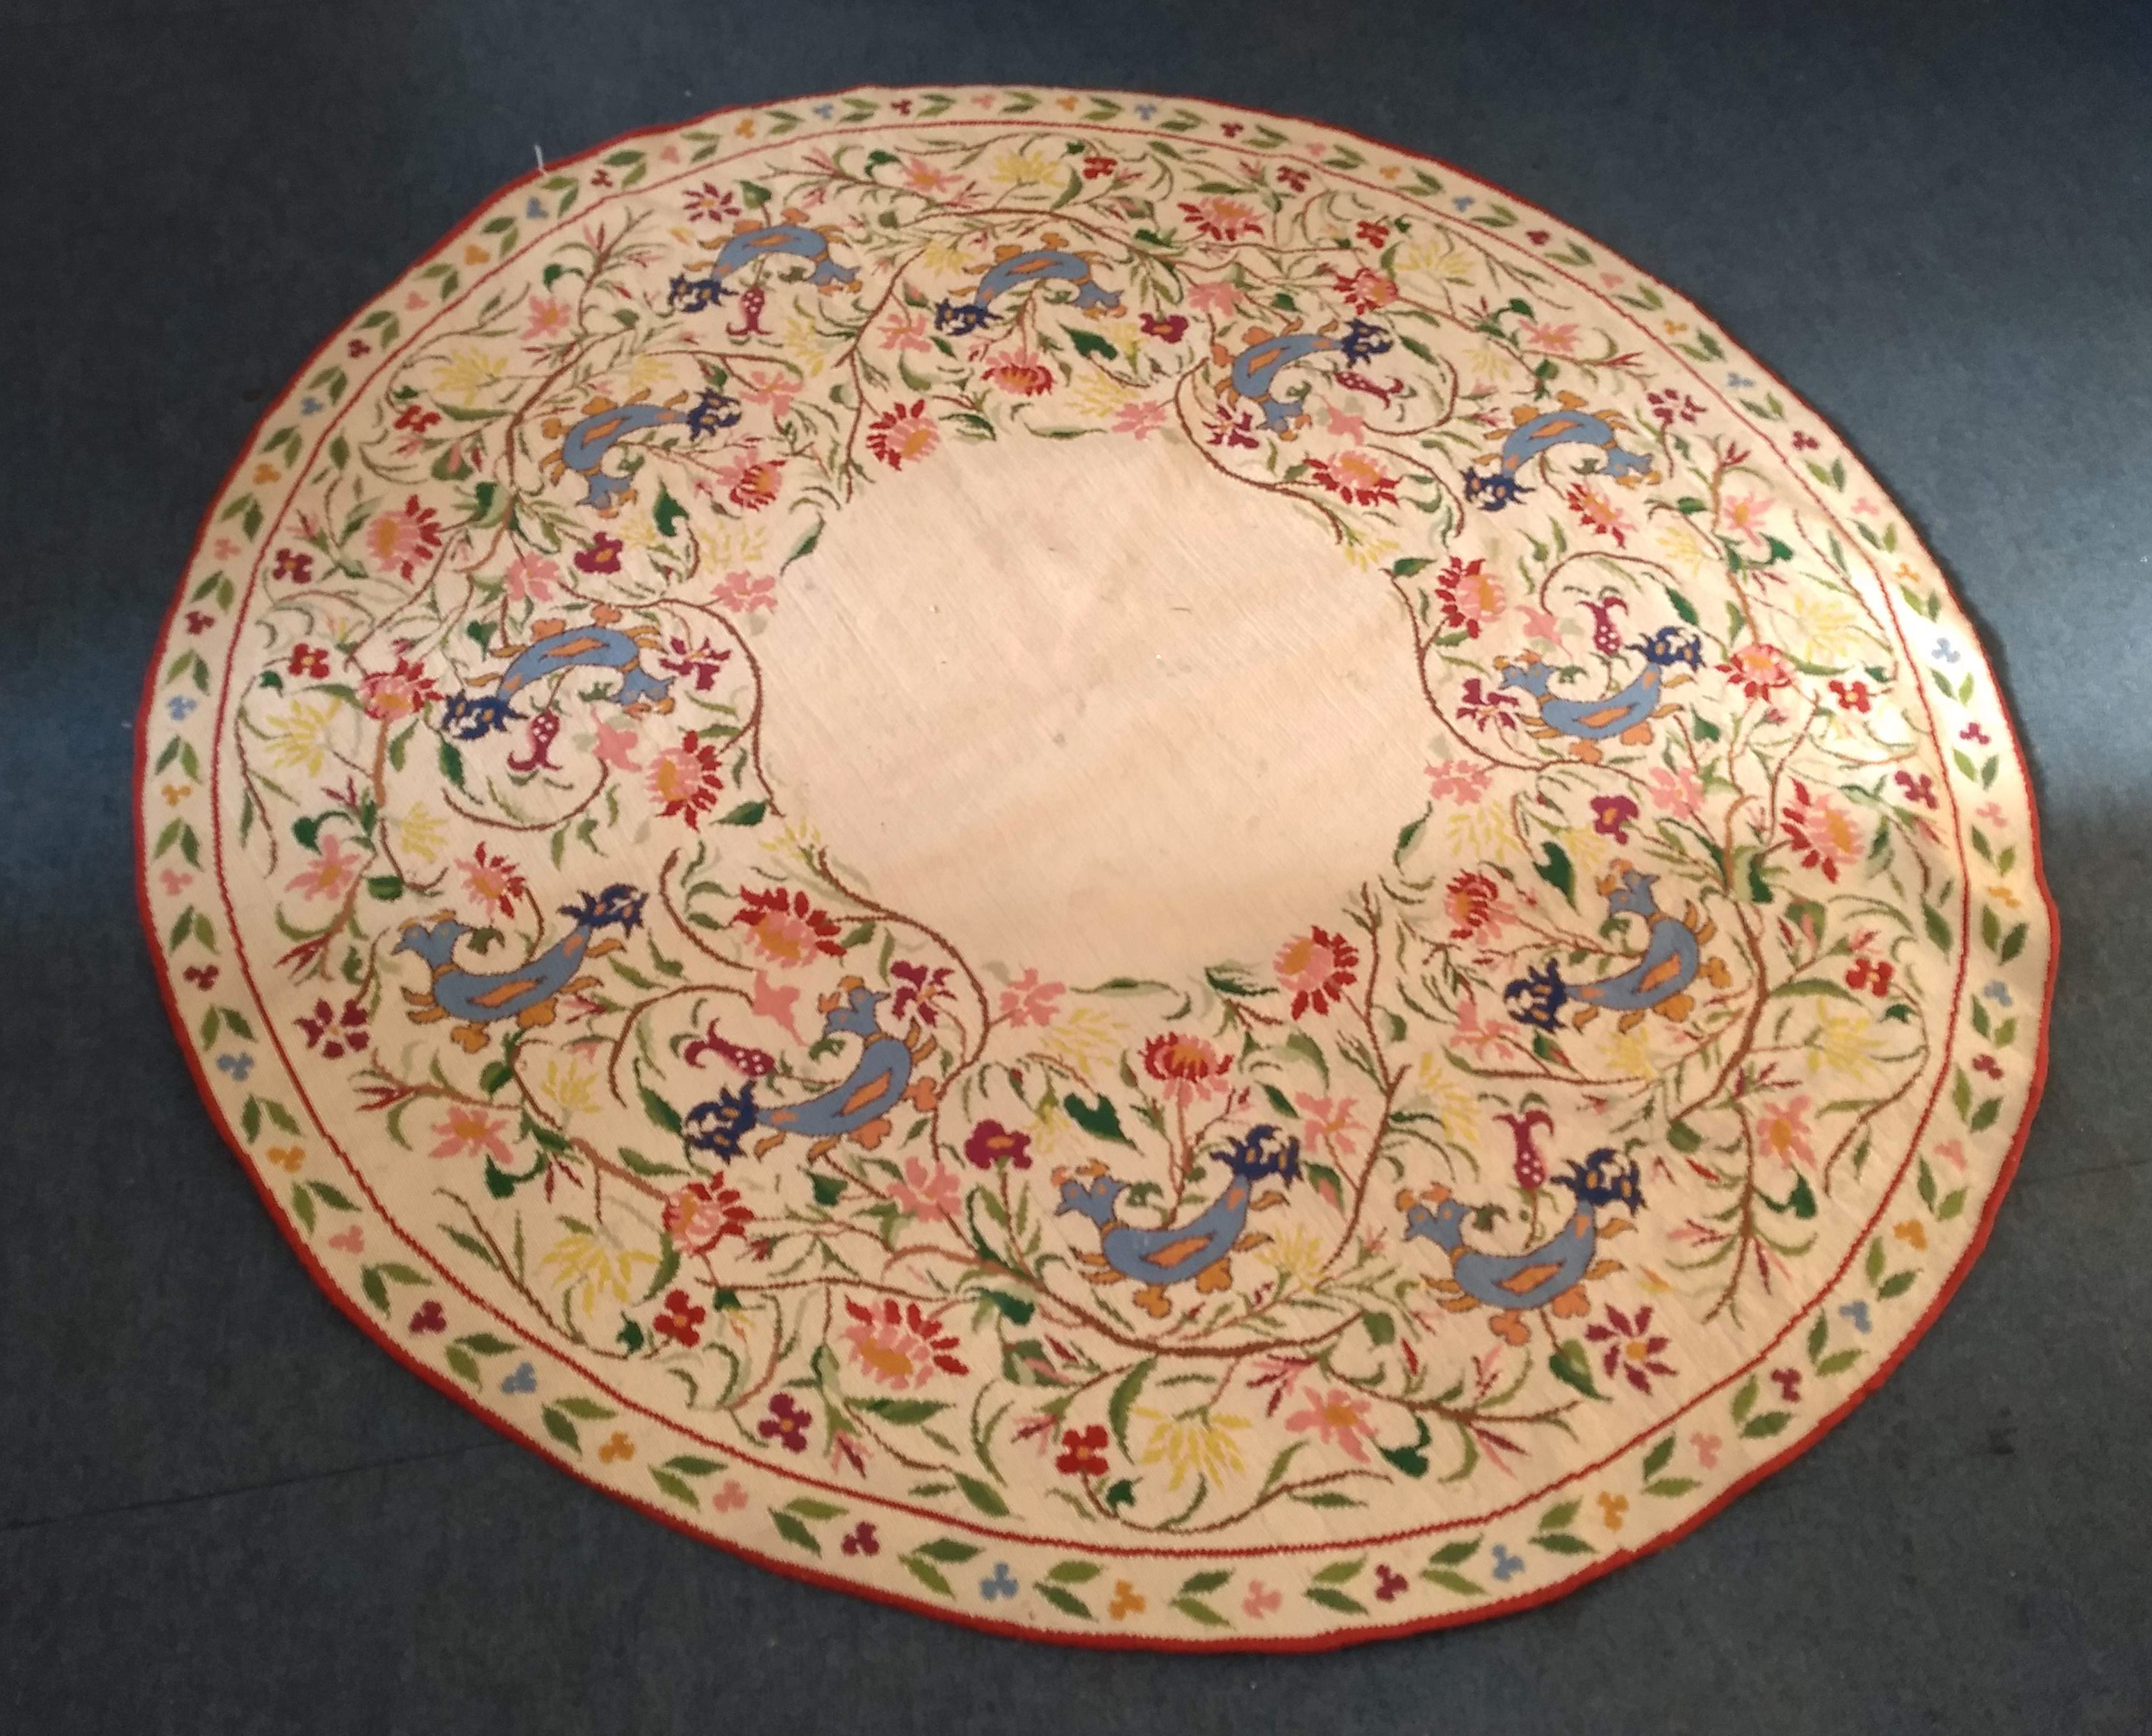 A 20th Century Greek woollen circular rug, floral and bird decoration on cream ground, 'National